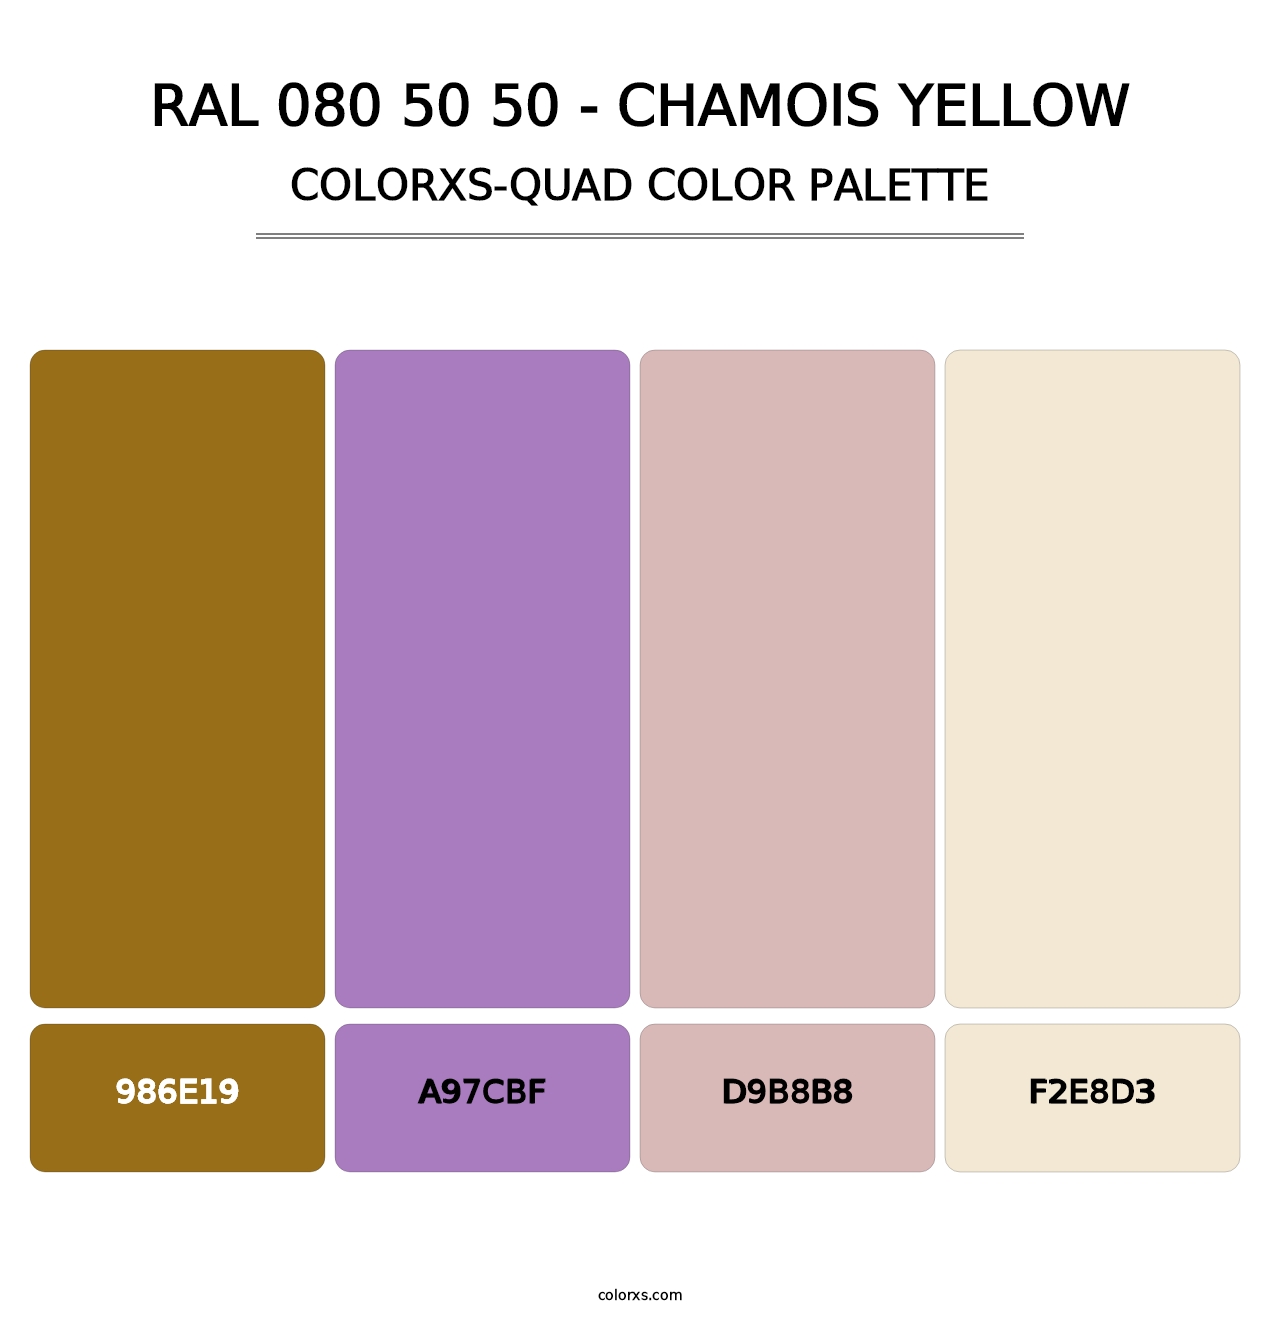 RAL 080 50 50 - Chamois Yellow - Colorxs Quad Palette